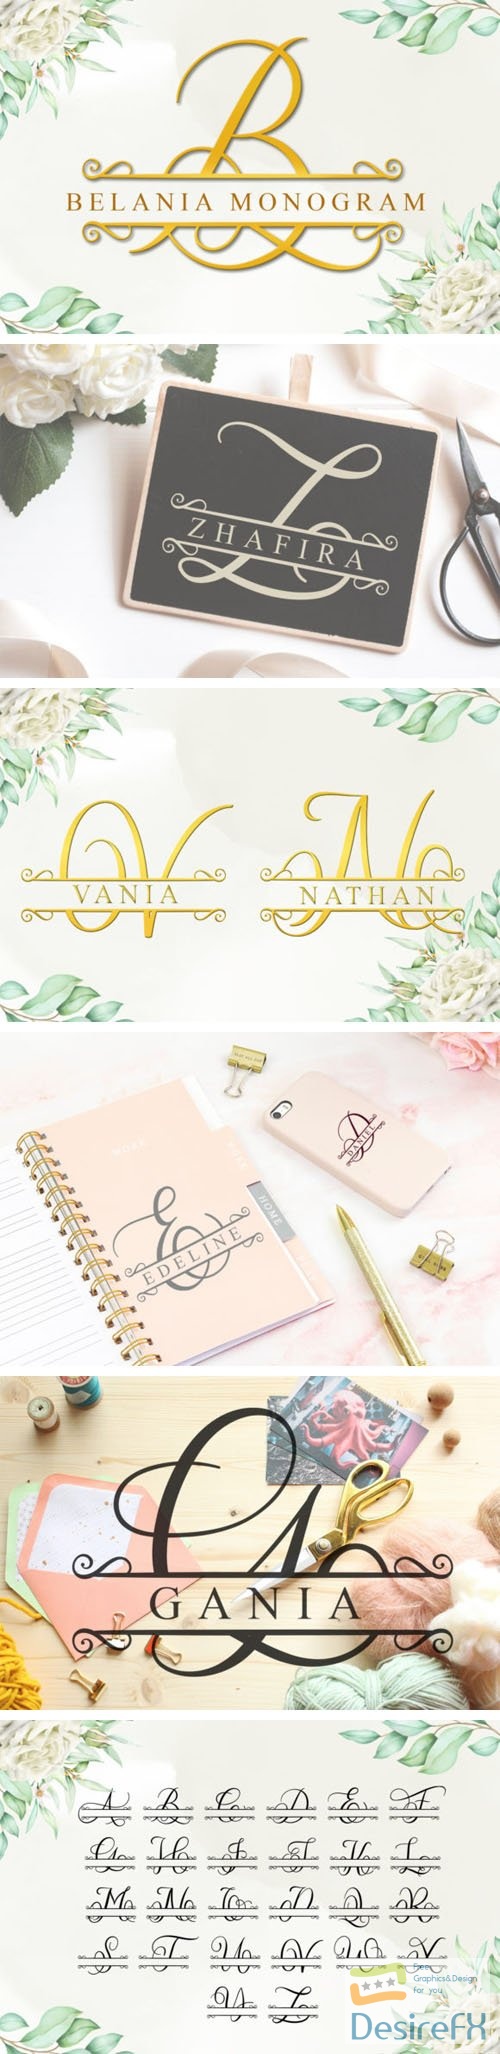 Belania Monogram - Charming Decorative Font